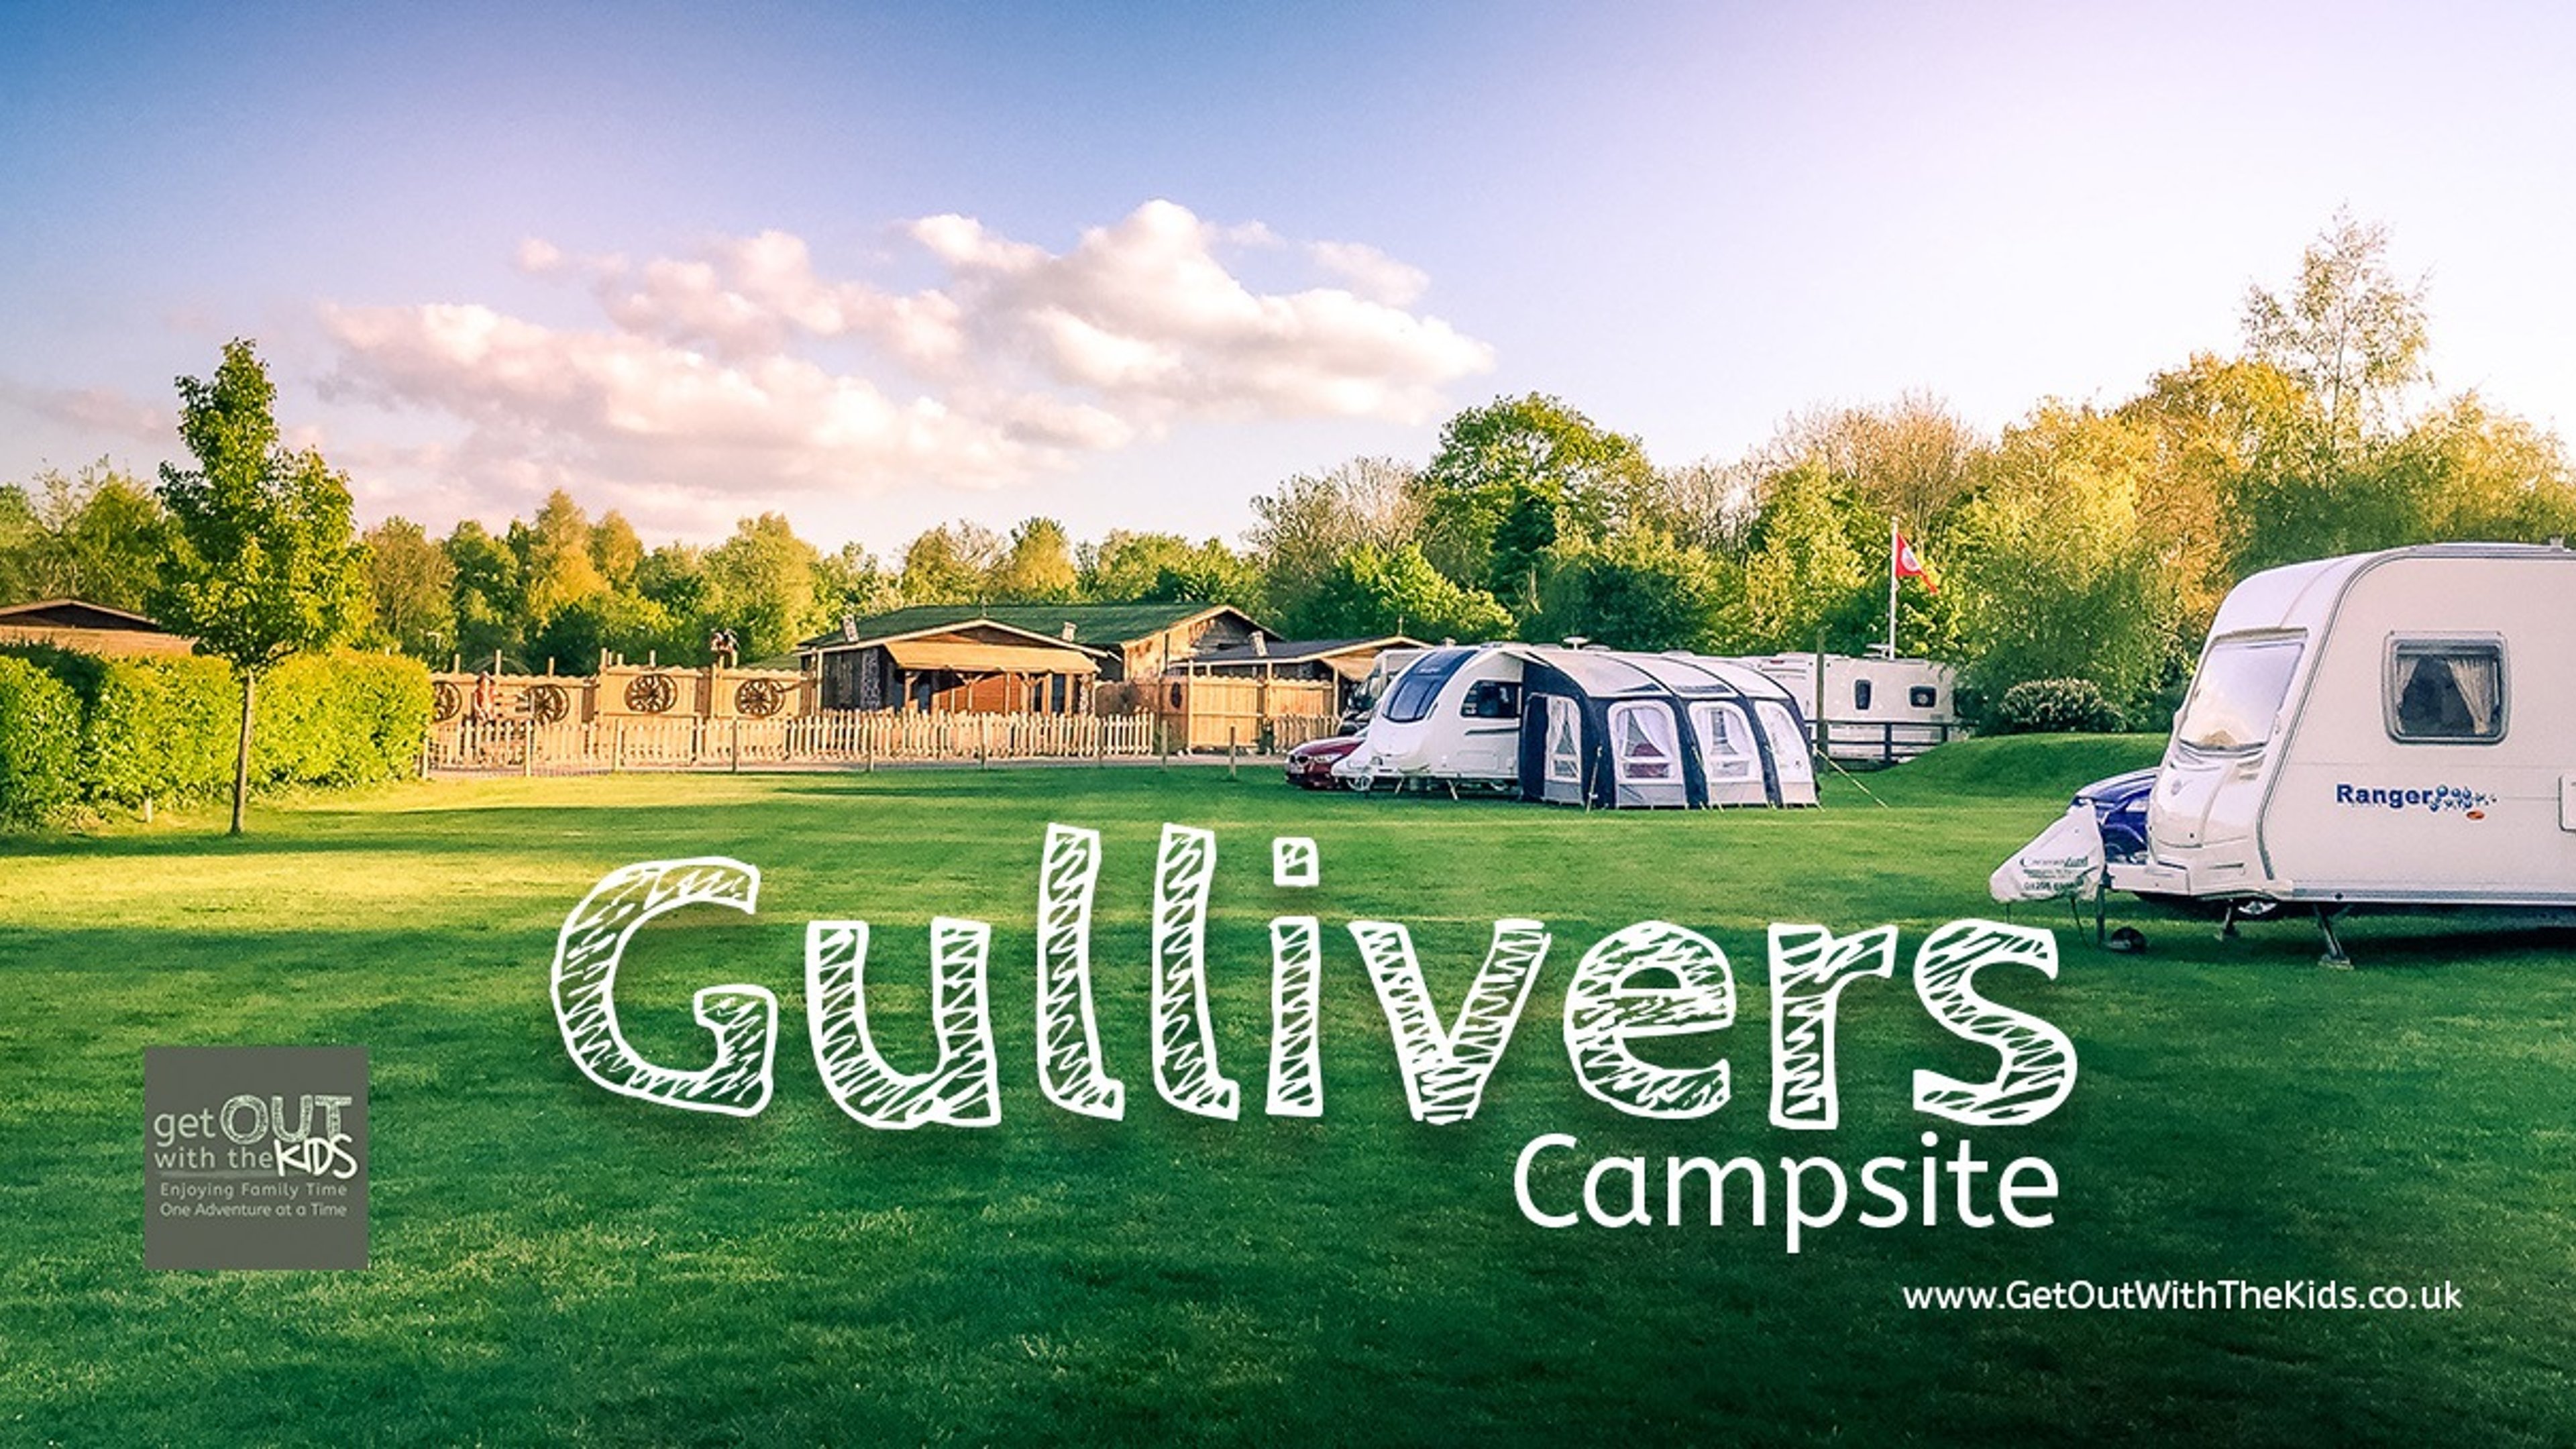 Gulliver's Campsite in Milton Keynes